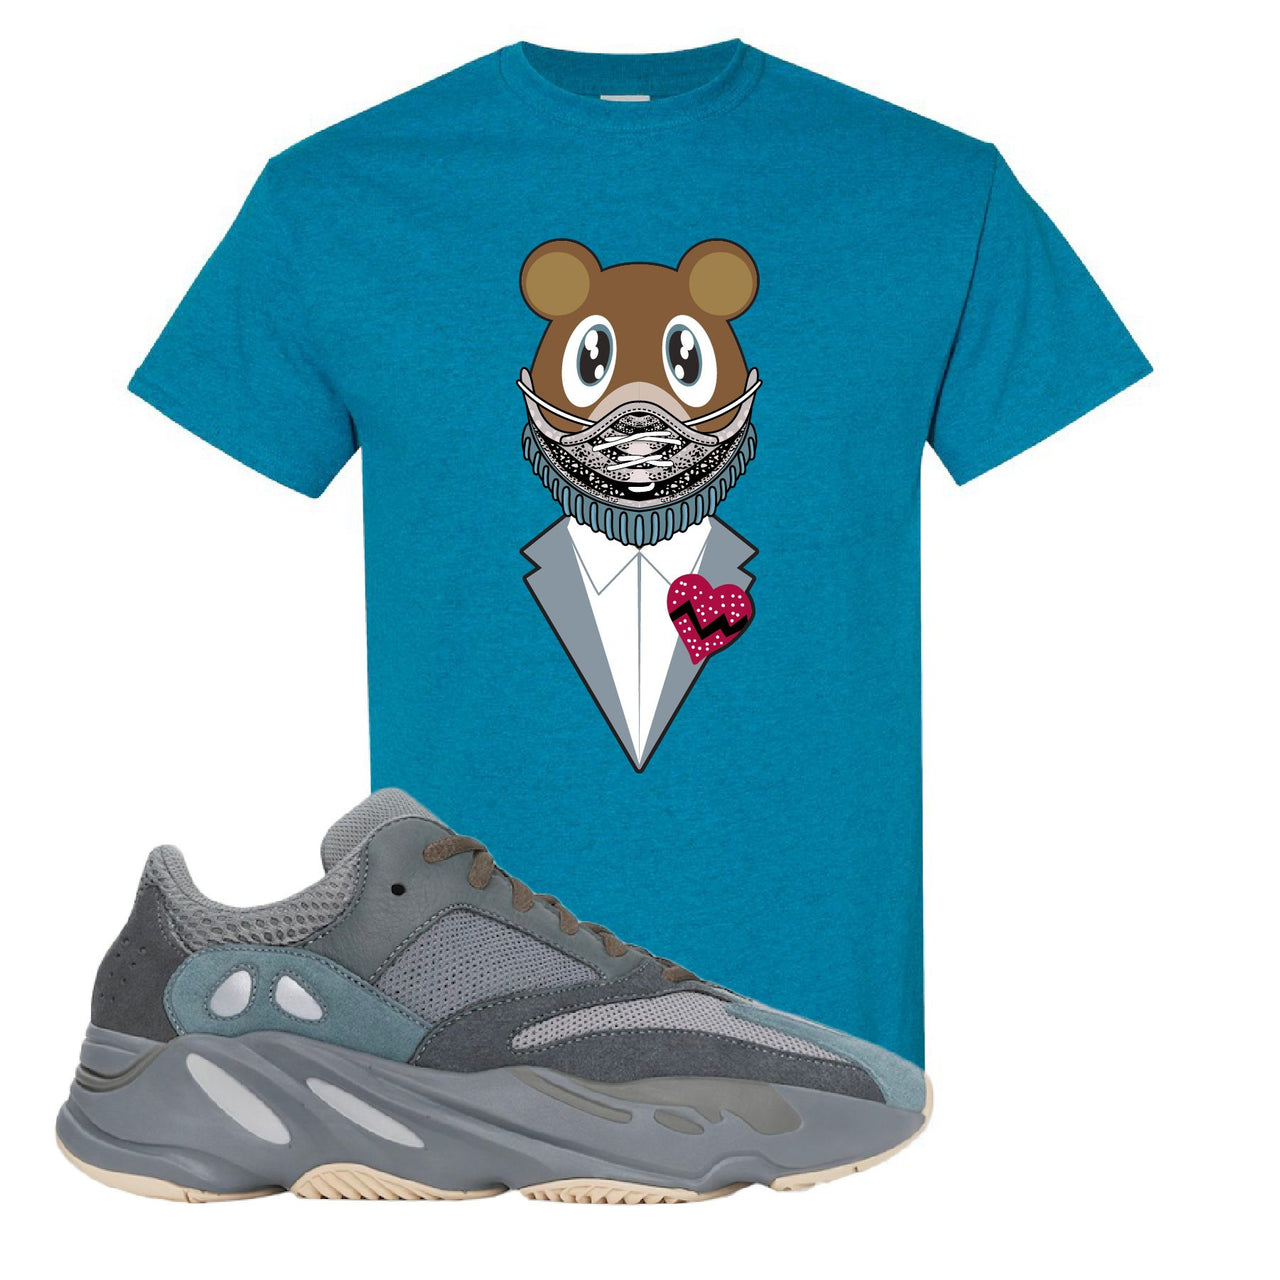 Yeezy Boost 700 Teal Blue Yeezy Sneaker Mask Antique Saphire Sneaker Hook Up T-Shirt